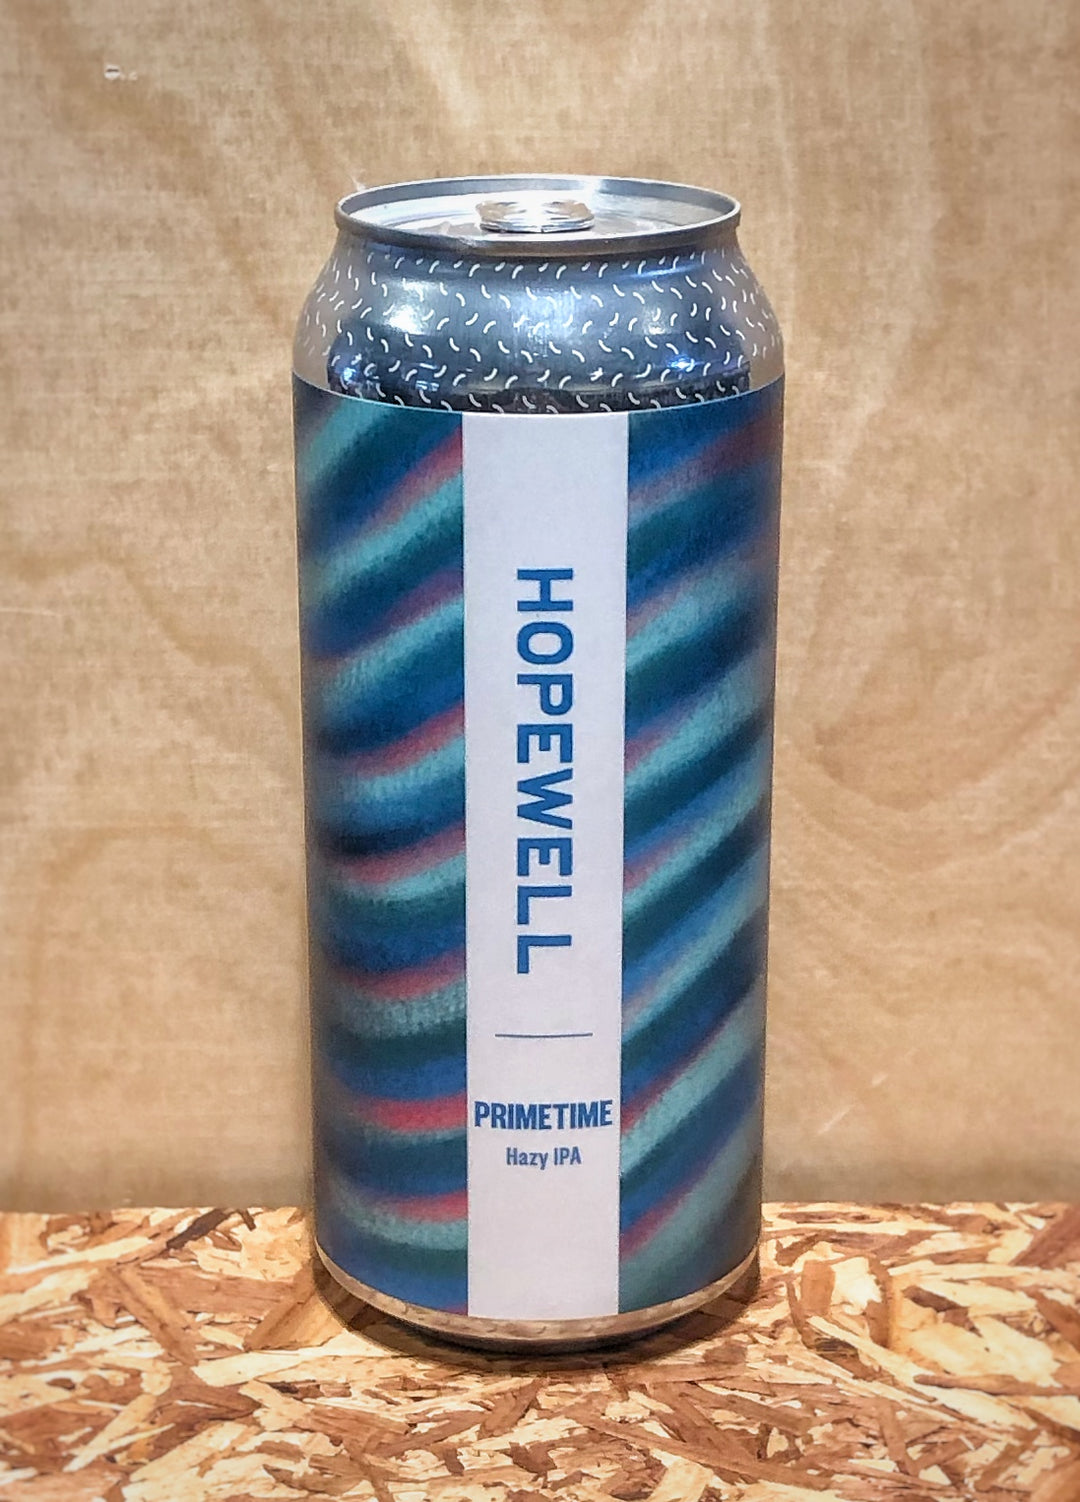 Hopewell 'Primetime' Hazy IPA (Chicago, IL)